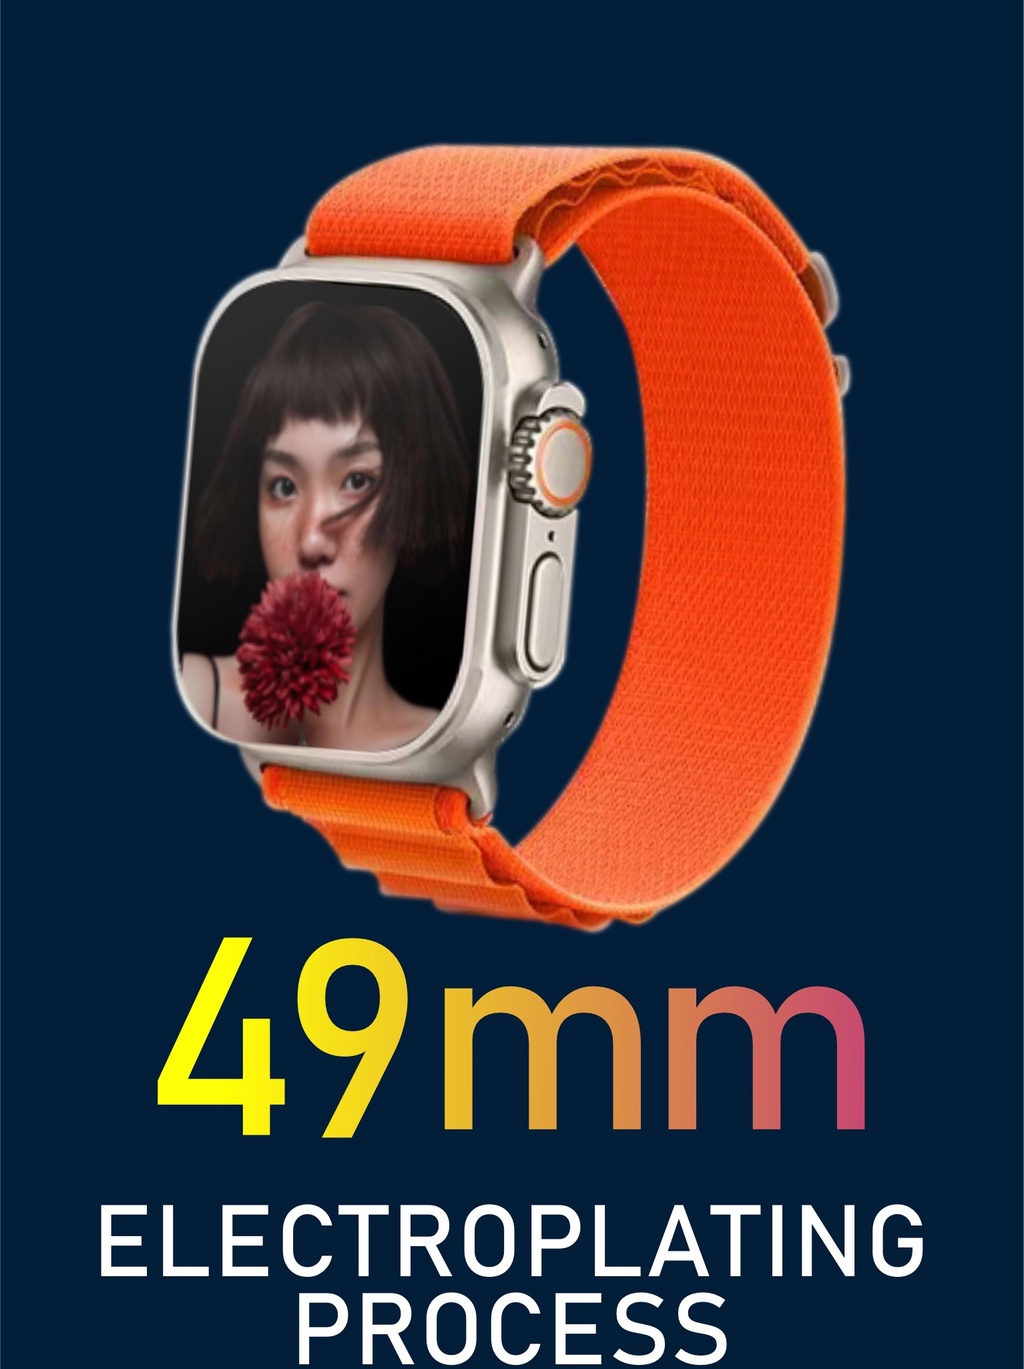 hello3 HELLO Watch 3 PLUS Reloj Inteligente Serie 8 Ultra 2,04 Pulgadas  Pantalla Amoled 49mm Bluetooth Smartwatch Impermeable Álbum De Fotos Música  Local EBook PX93